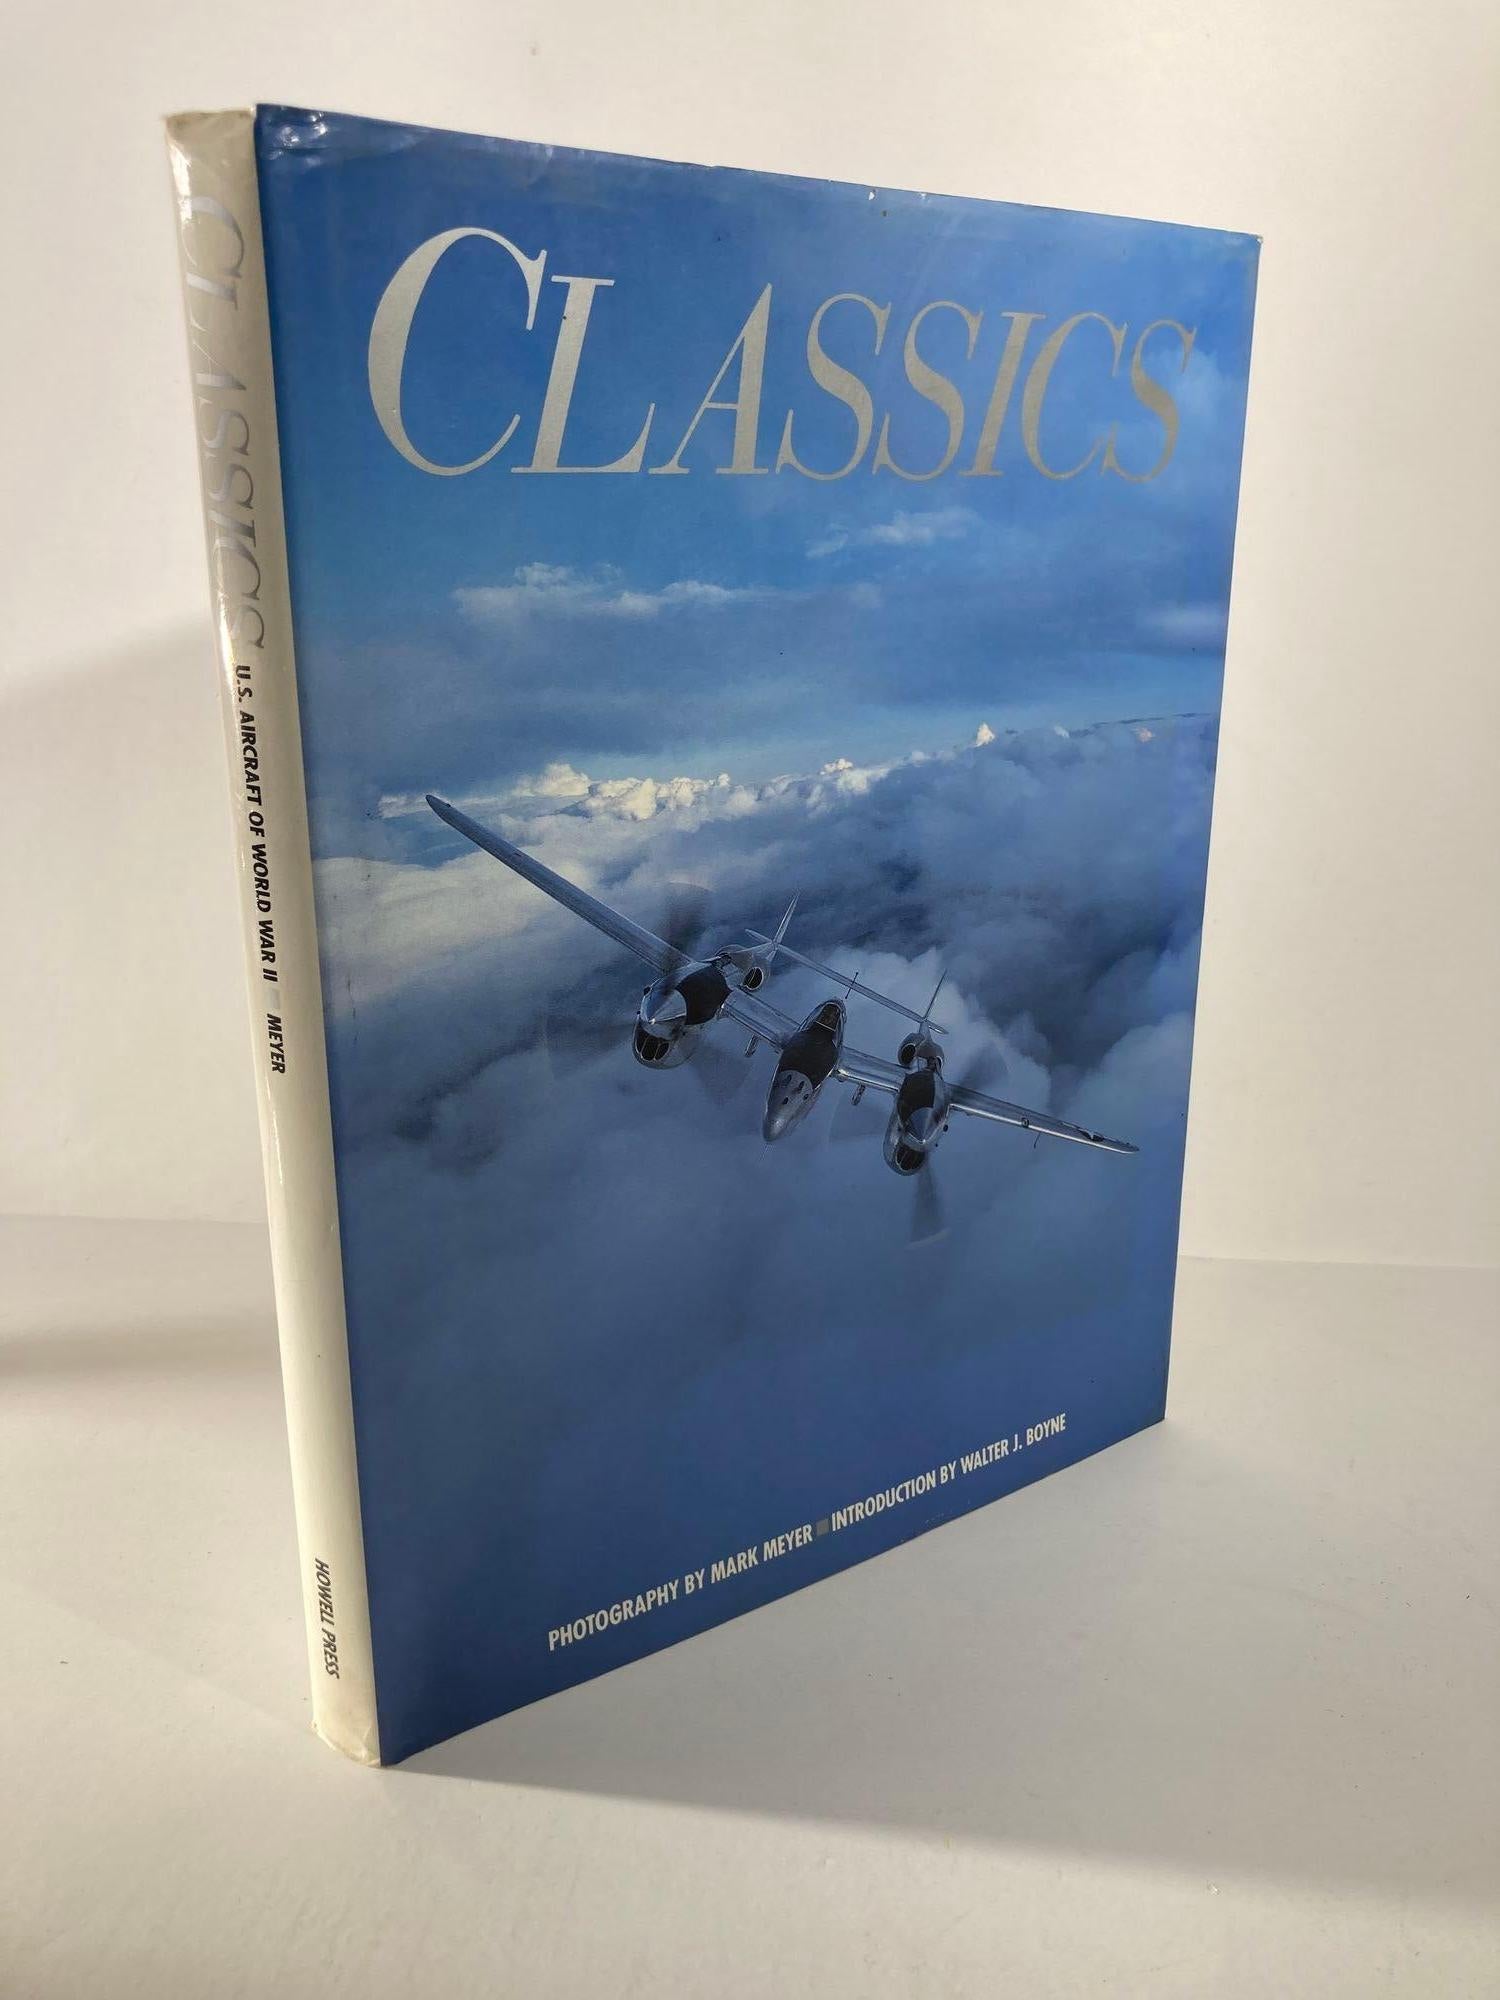 American Classical Classics : U. S. Aircraft of World War II by Walter J. Boyne, Mark Meyer For Sale